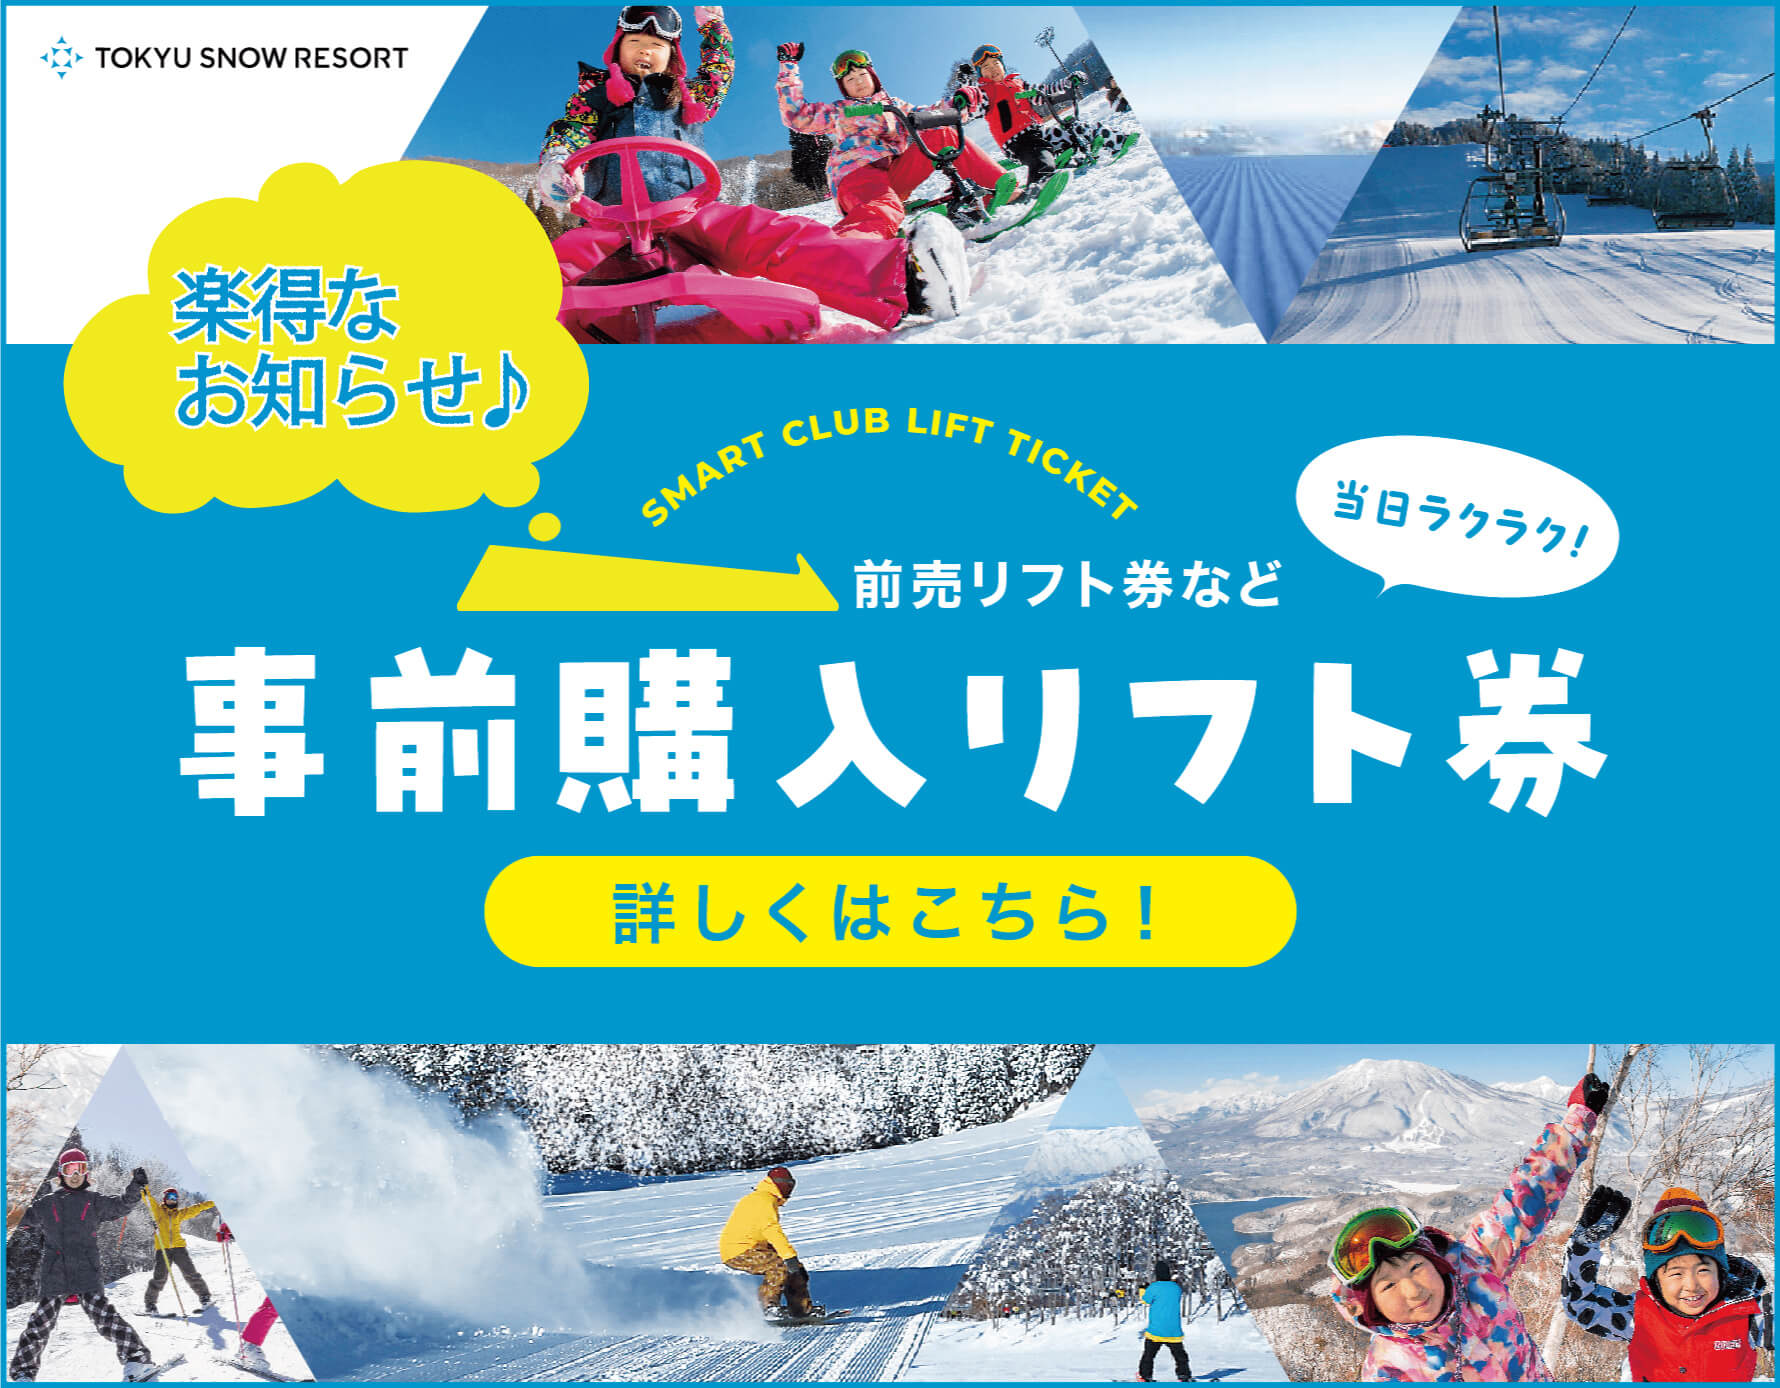 SKIJAM】スキージャム勝山｜西日本最大級のゲレンデ